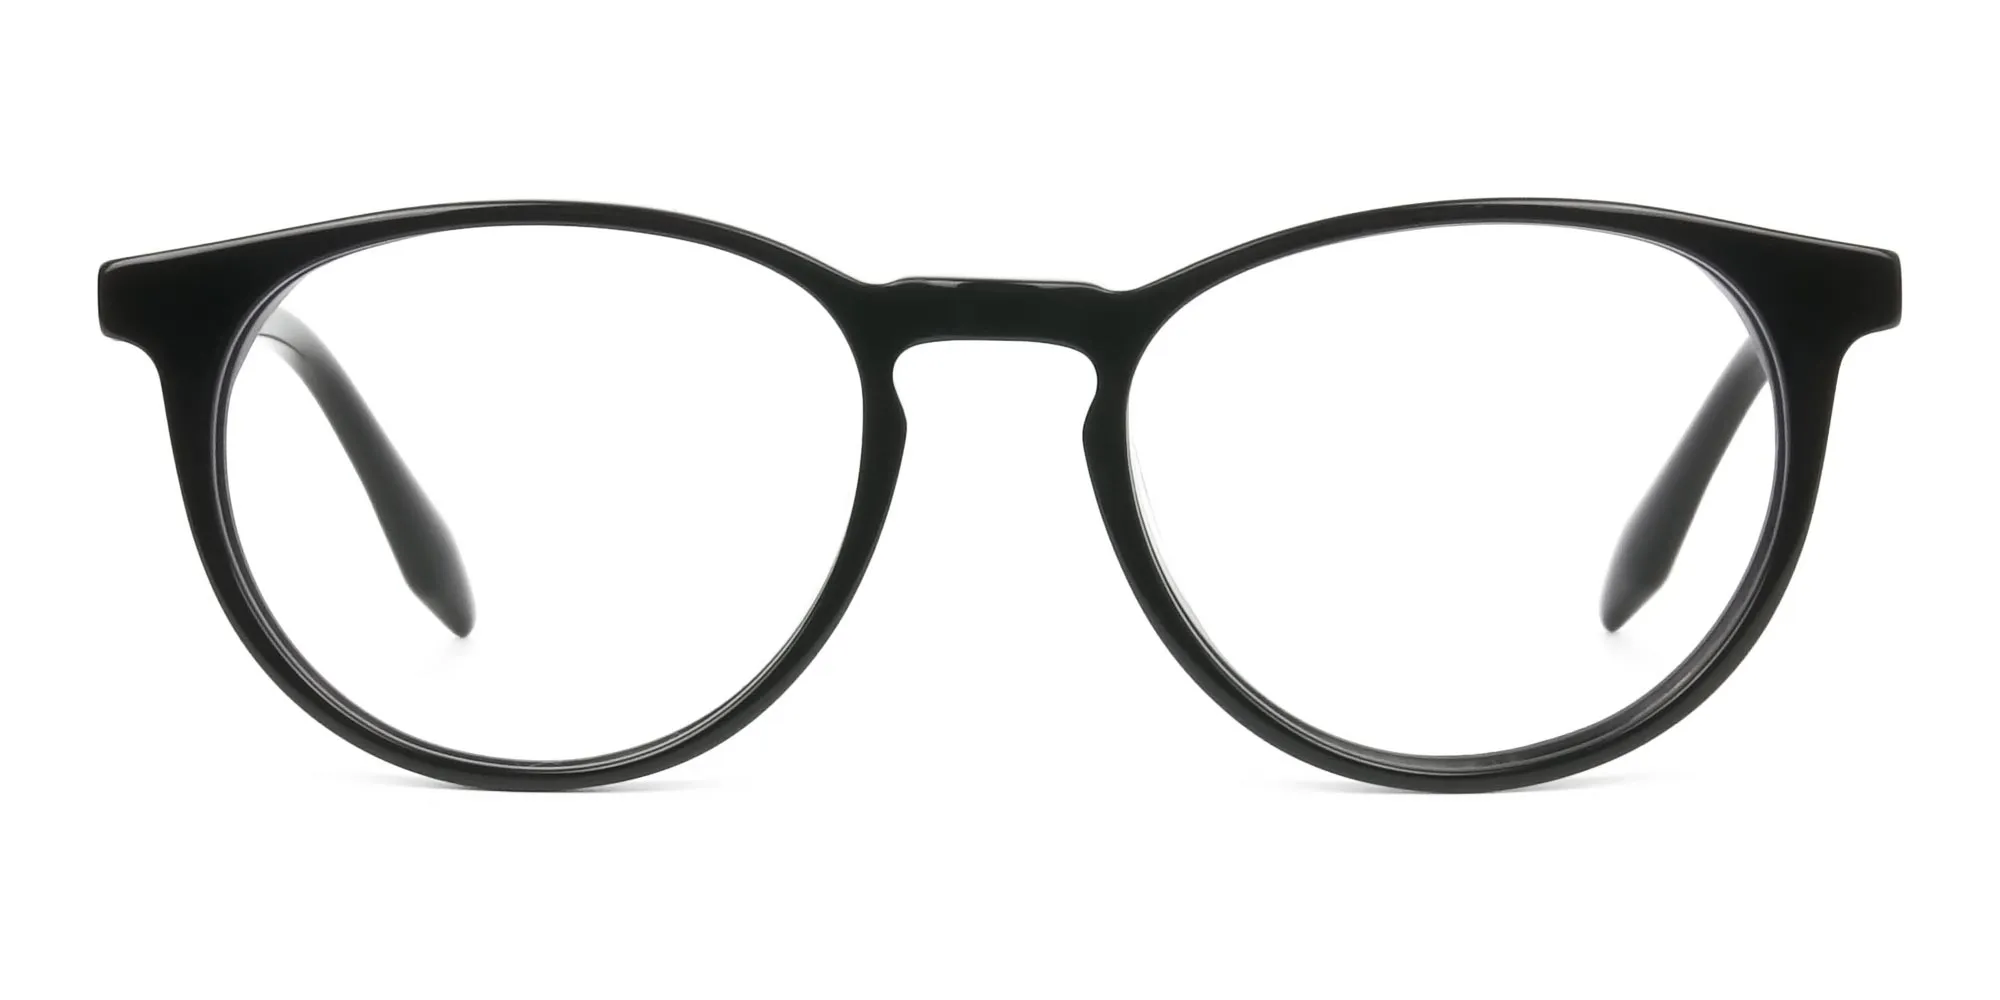 Keyhole Black Retro Round Glasses in Acetate - 2